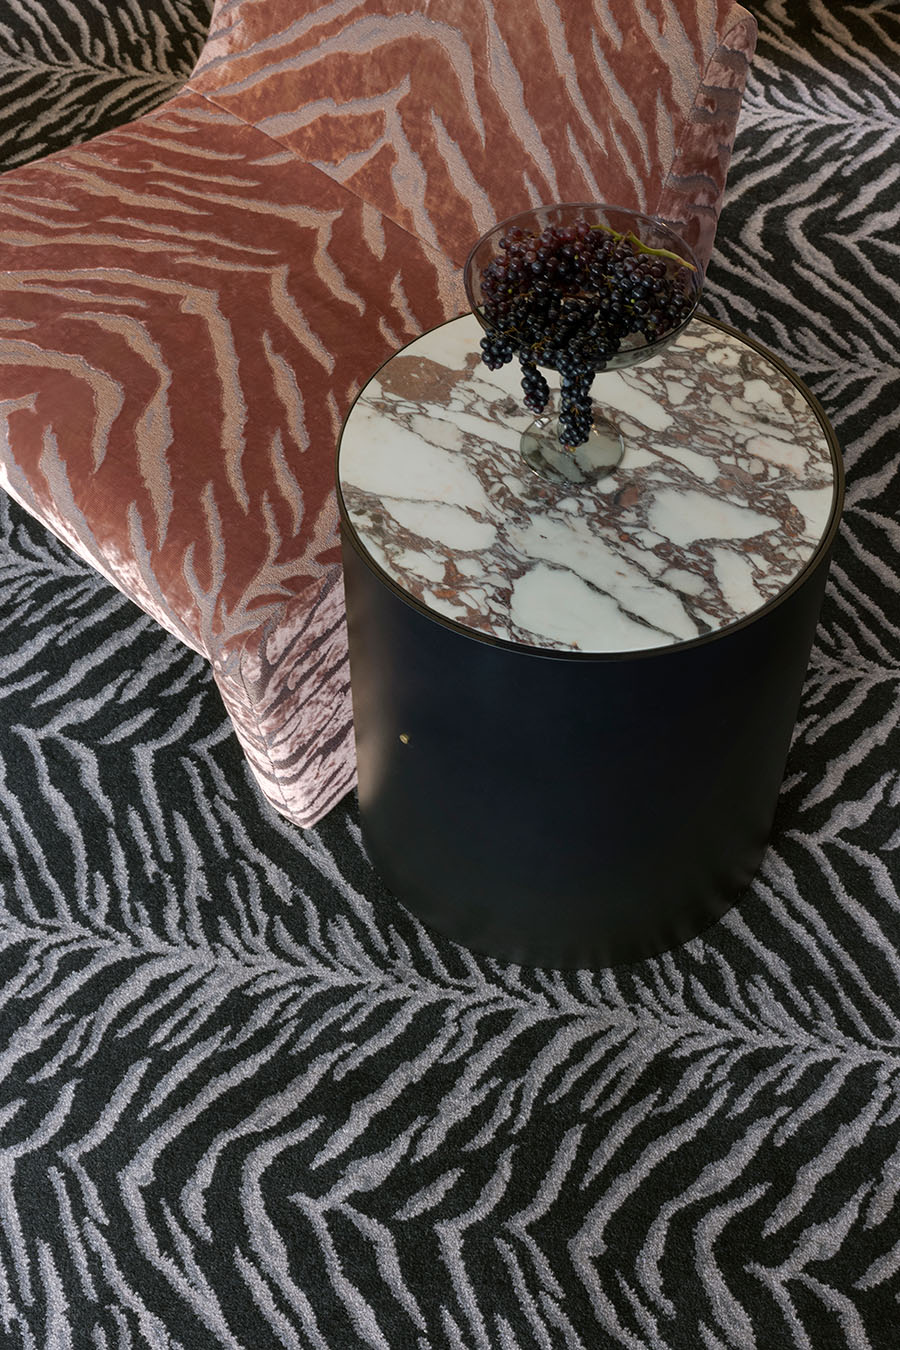 Close up image of tiger print Tigre carpet in black